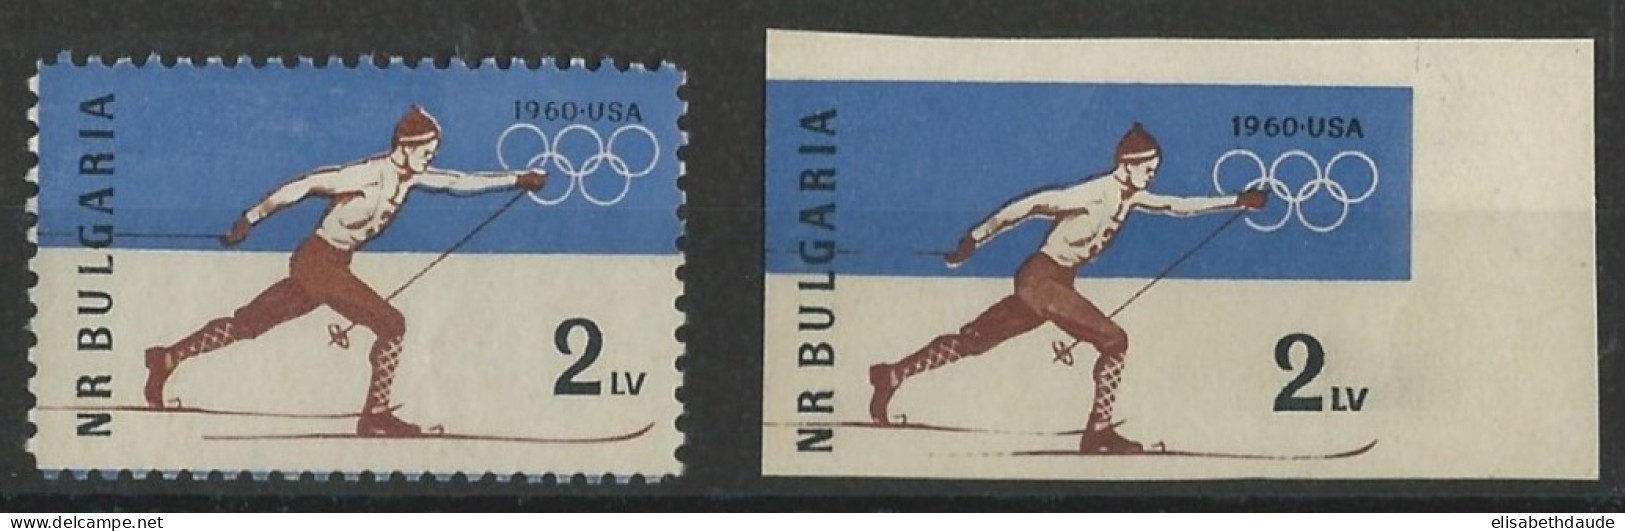 BULGARIE - 1960 - YVERT N°1006 + 1006a DENTELE + NON DENTELE ** MNH - Neufs